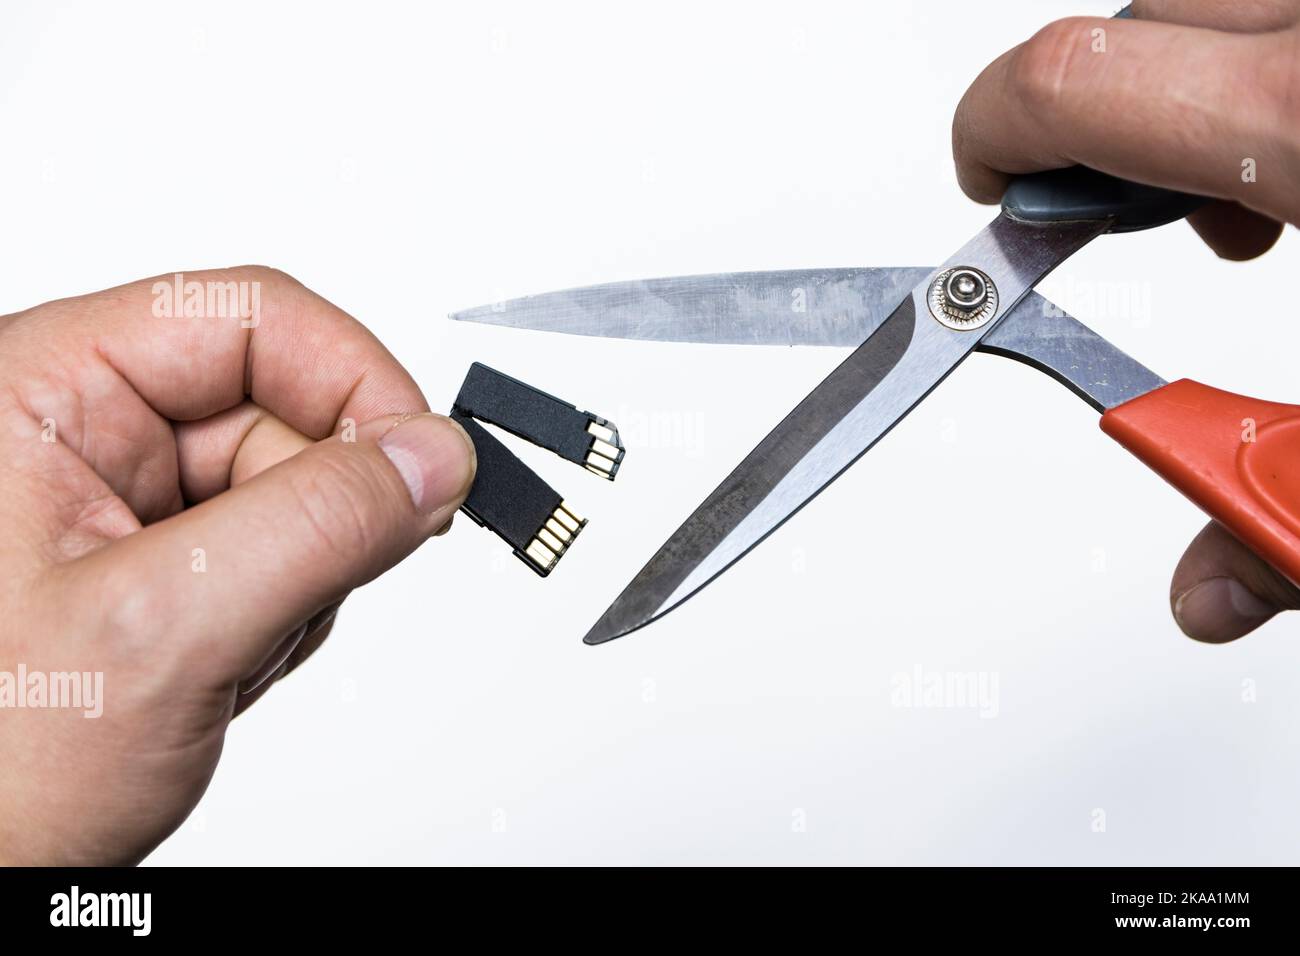 Cutting digital SD data card with heavy duty scissors Stock Photo